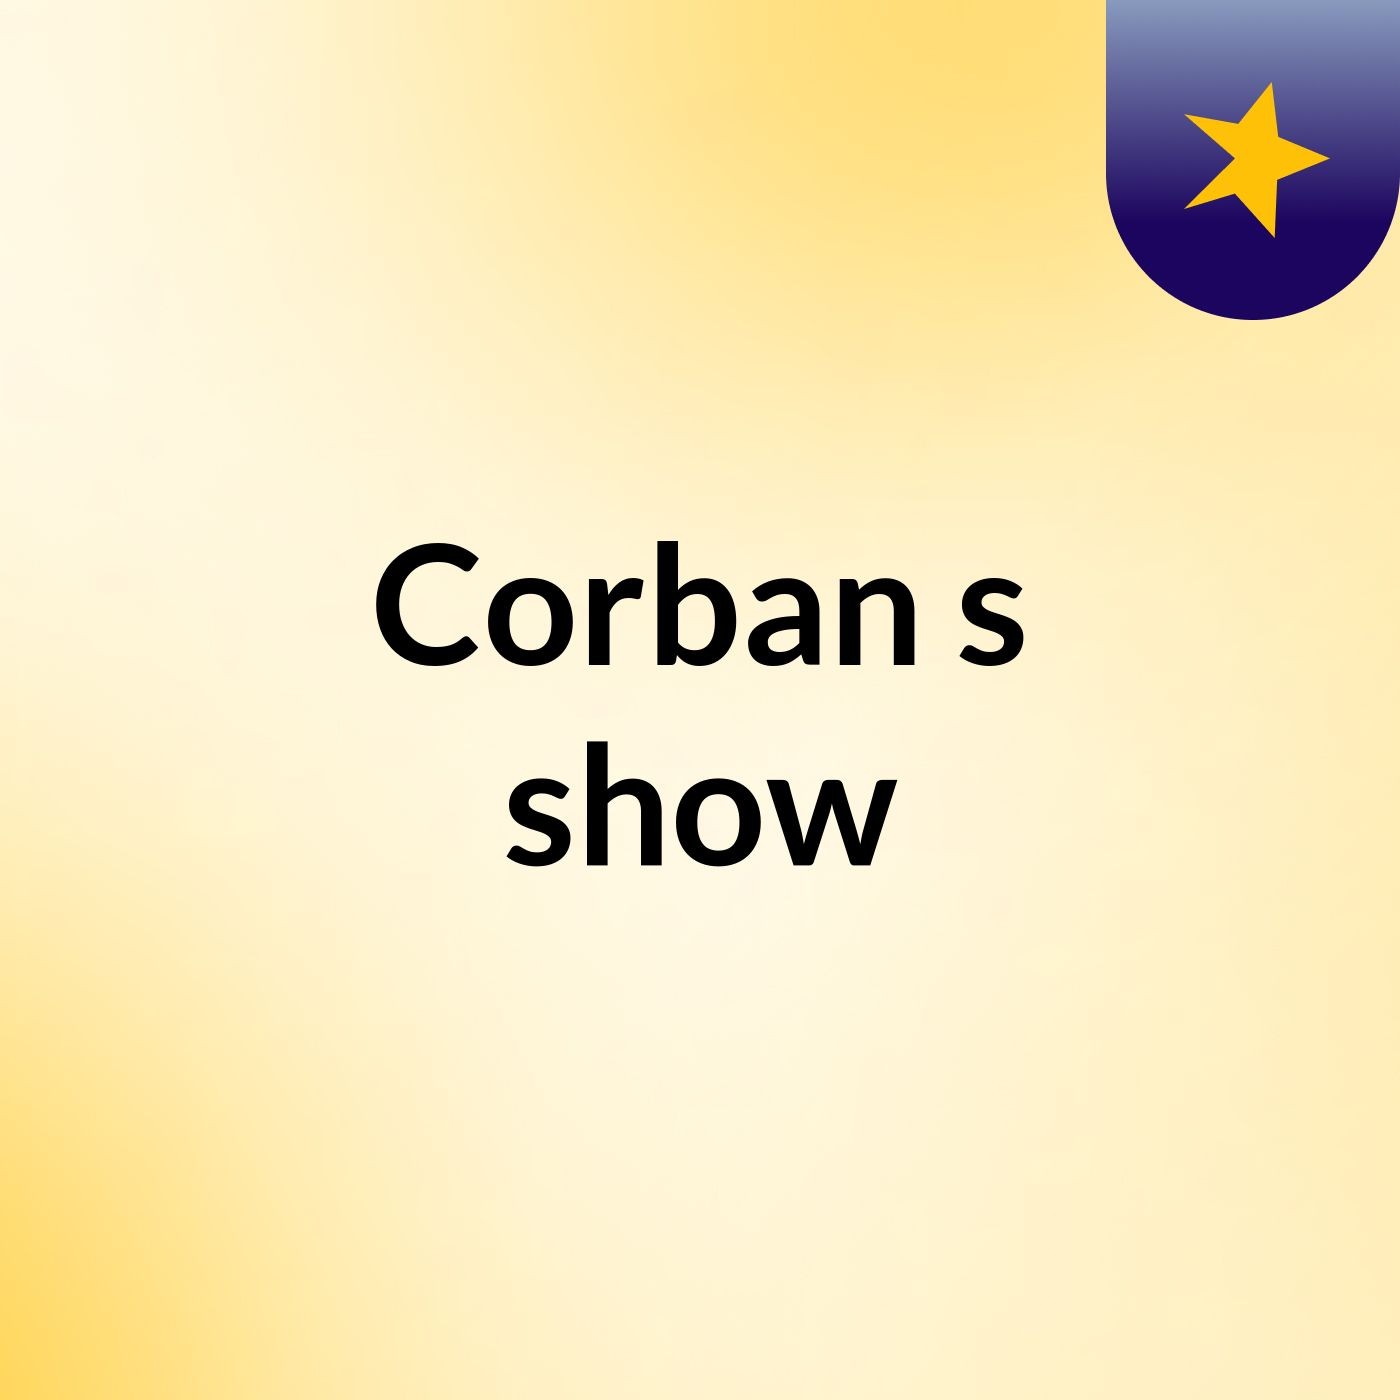 Corban's show